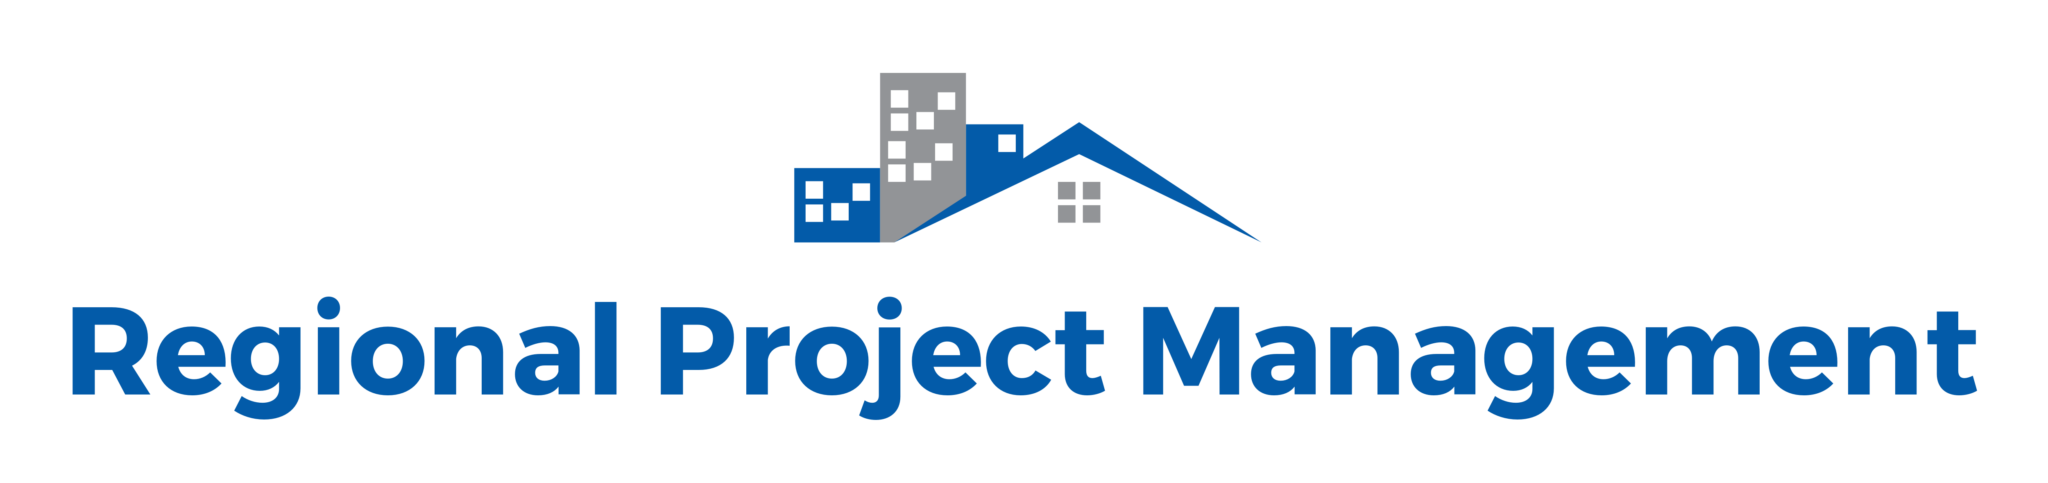 Regional Project Management Logo